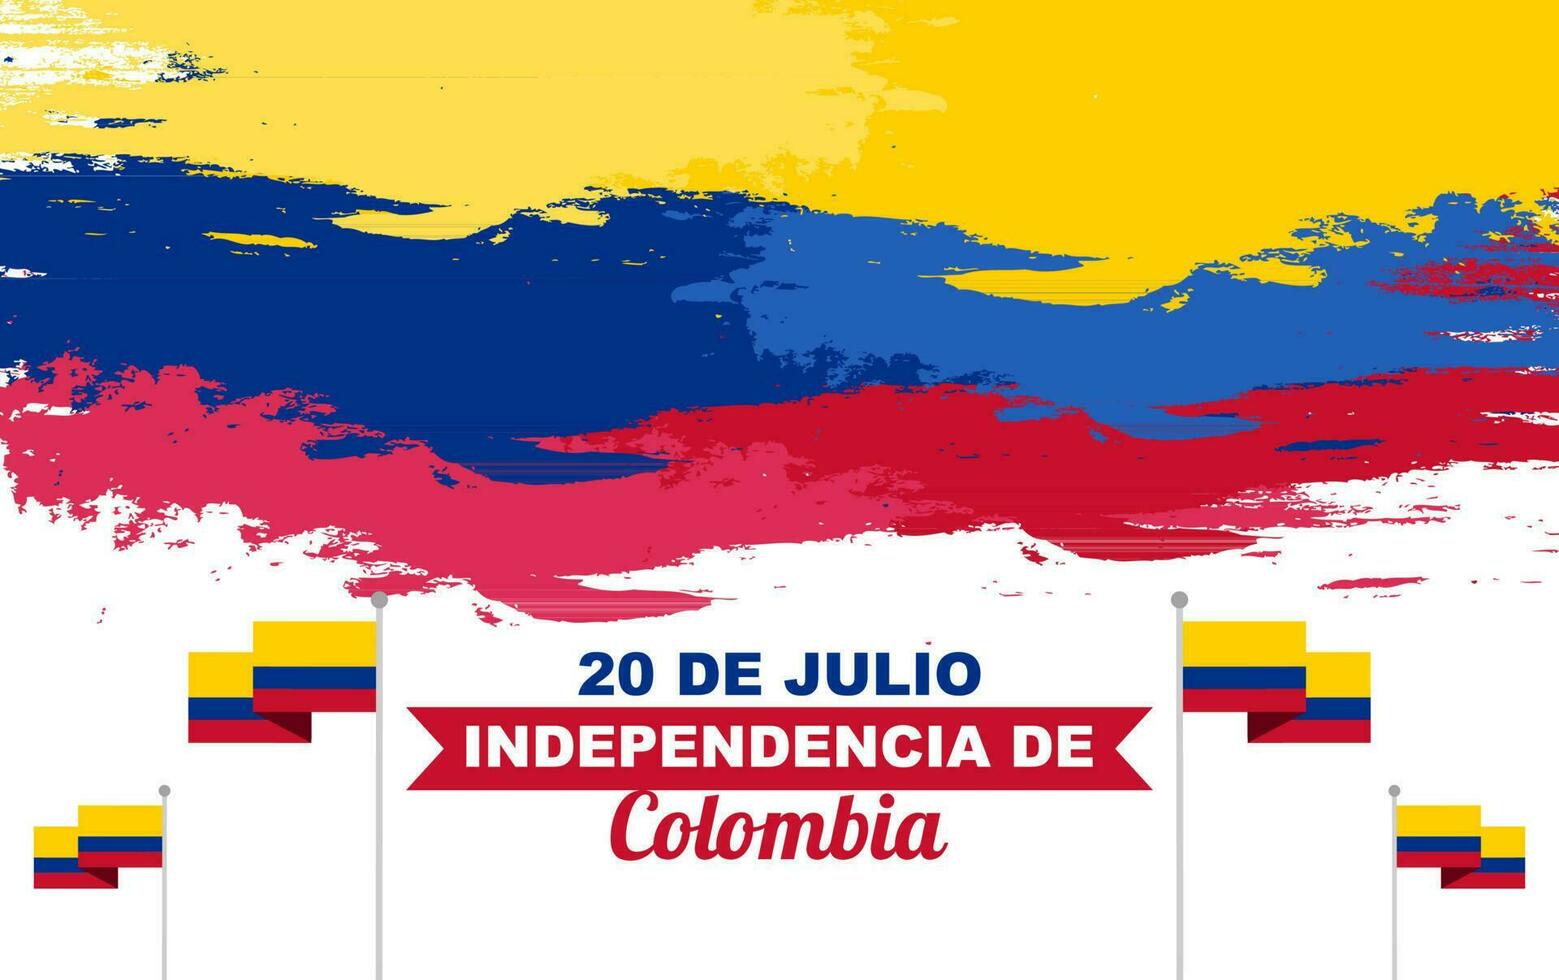 design av colombia oberoende dag på 20:e juli, firande hälsning affisch med flagga dekoration i borsta stroke stil vektor